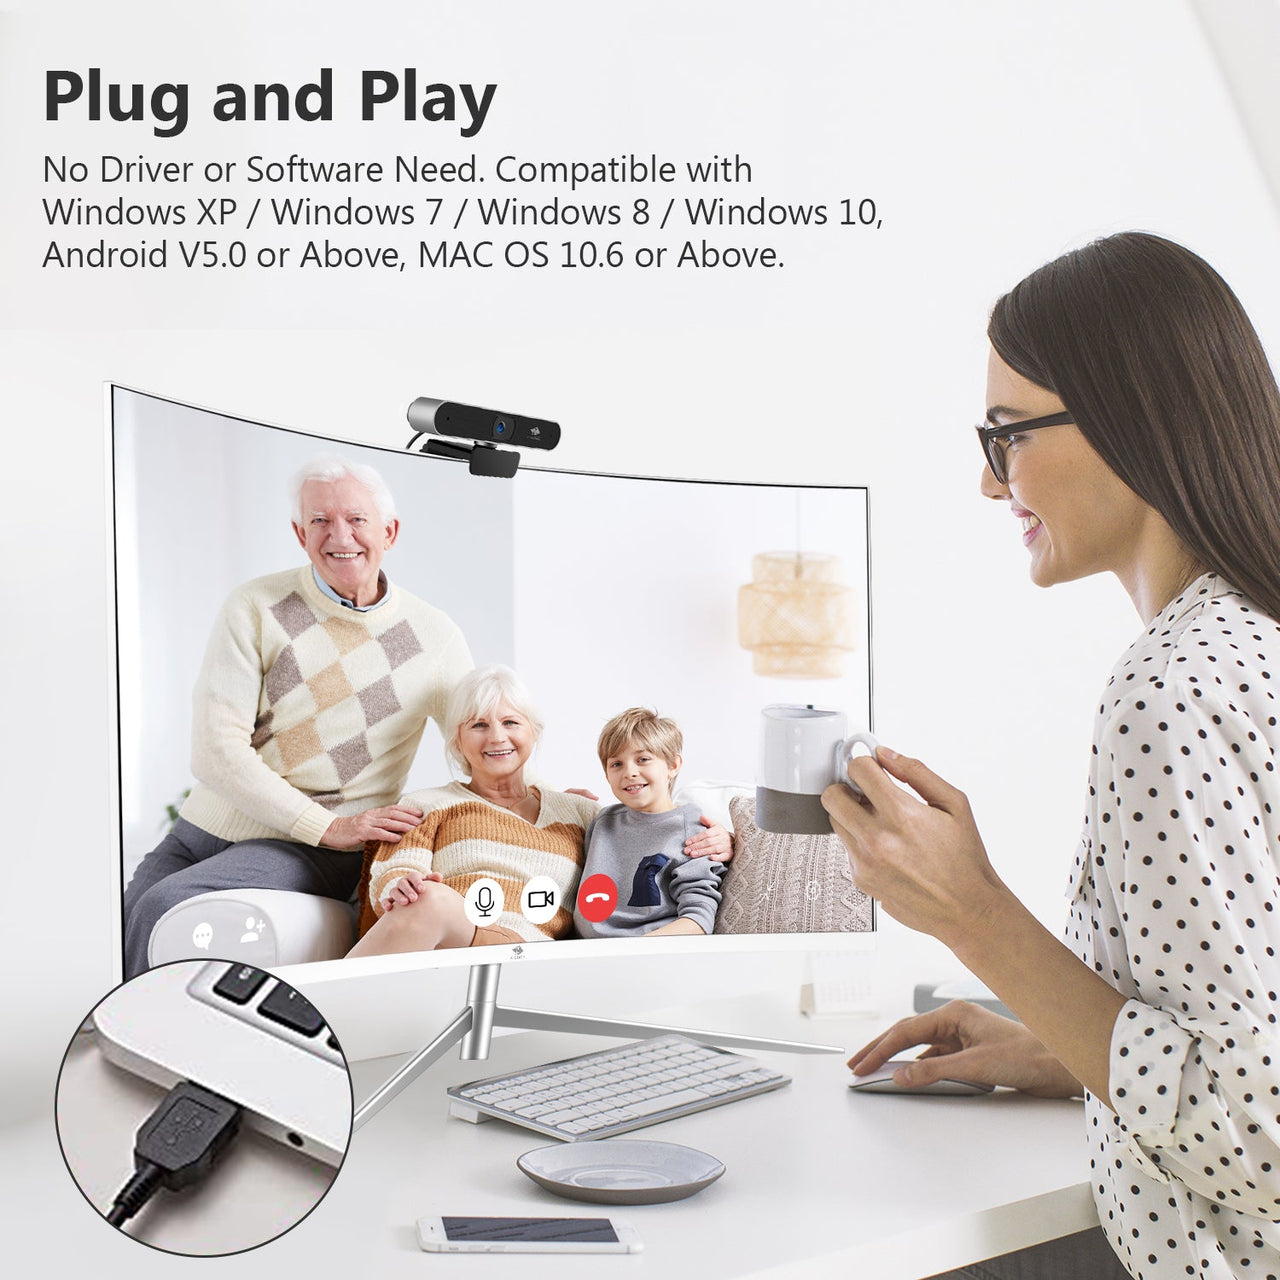 Z-EDGE ZW511 Full HD 1080P Auto Focus Webcam for PC, Desktop, and Laptop - InspiredGrabs.com